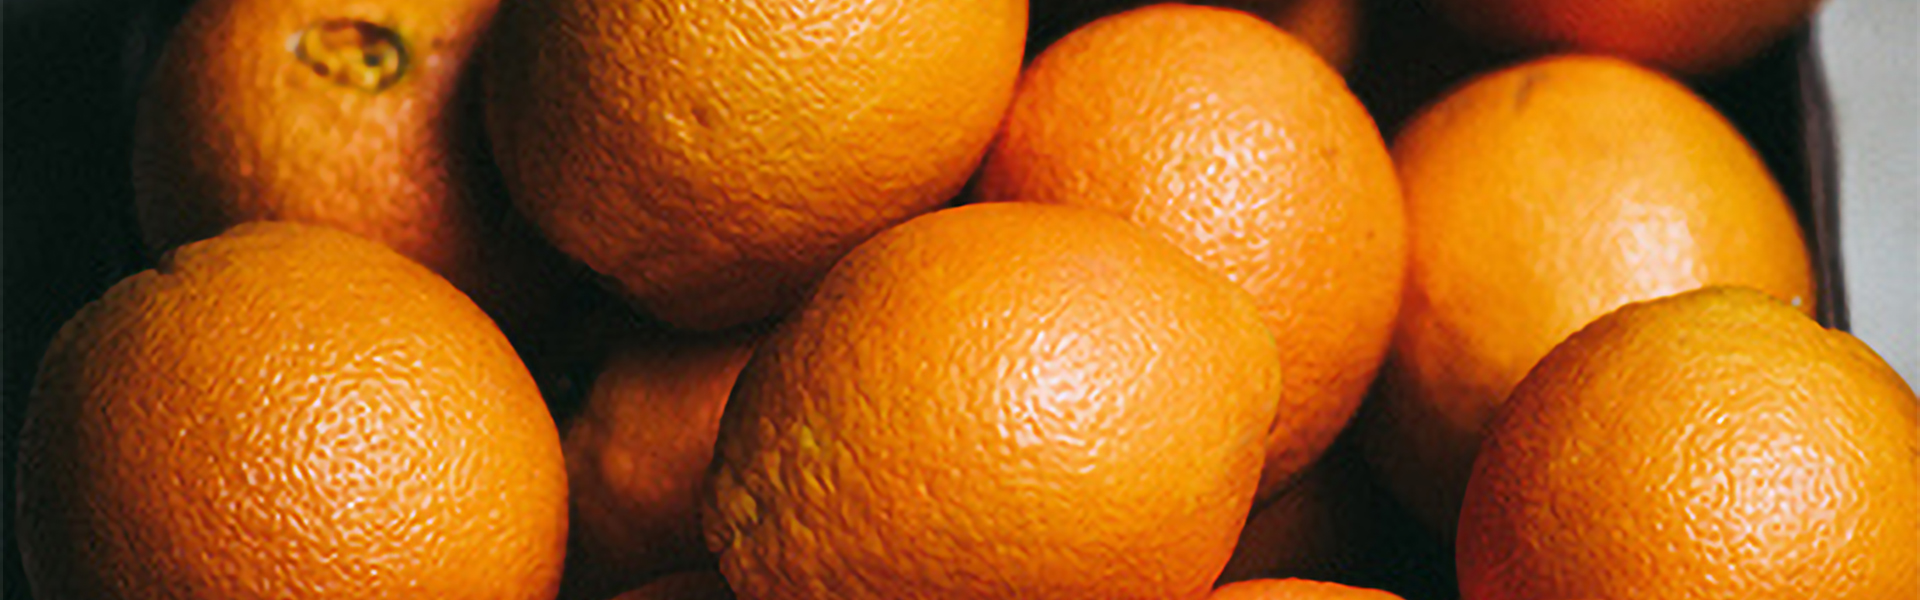 Know Your Food: Orange